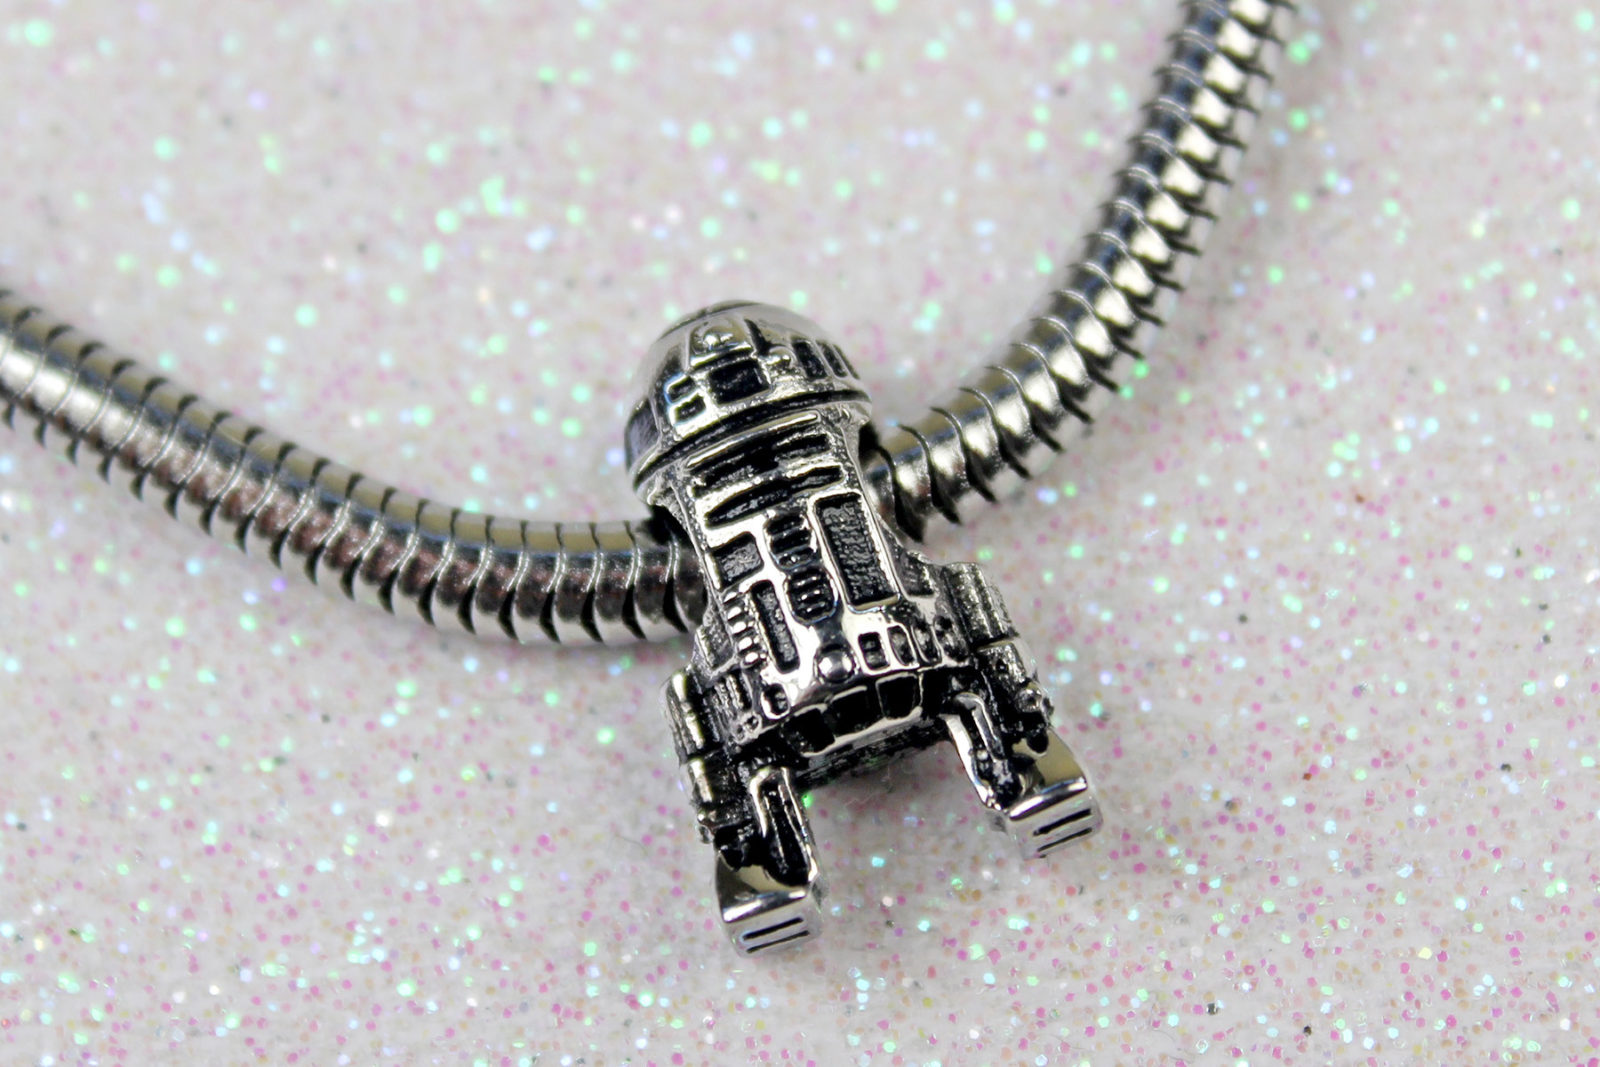 Body Vibe x Star Wars R2-D2 bead charm